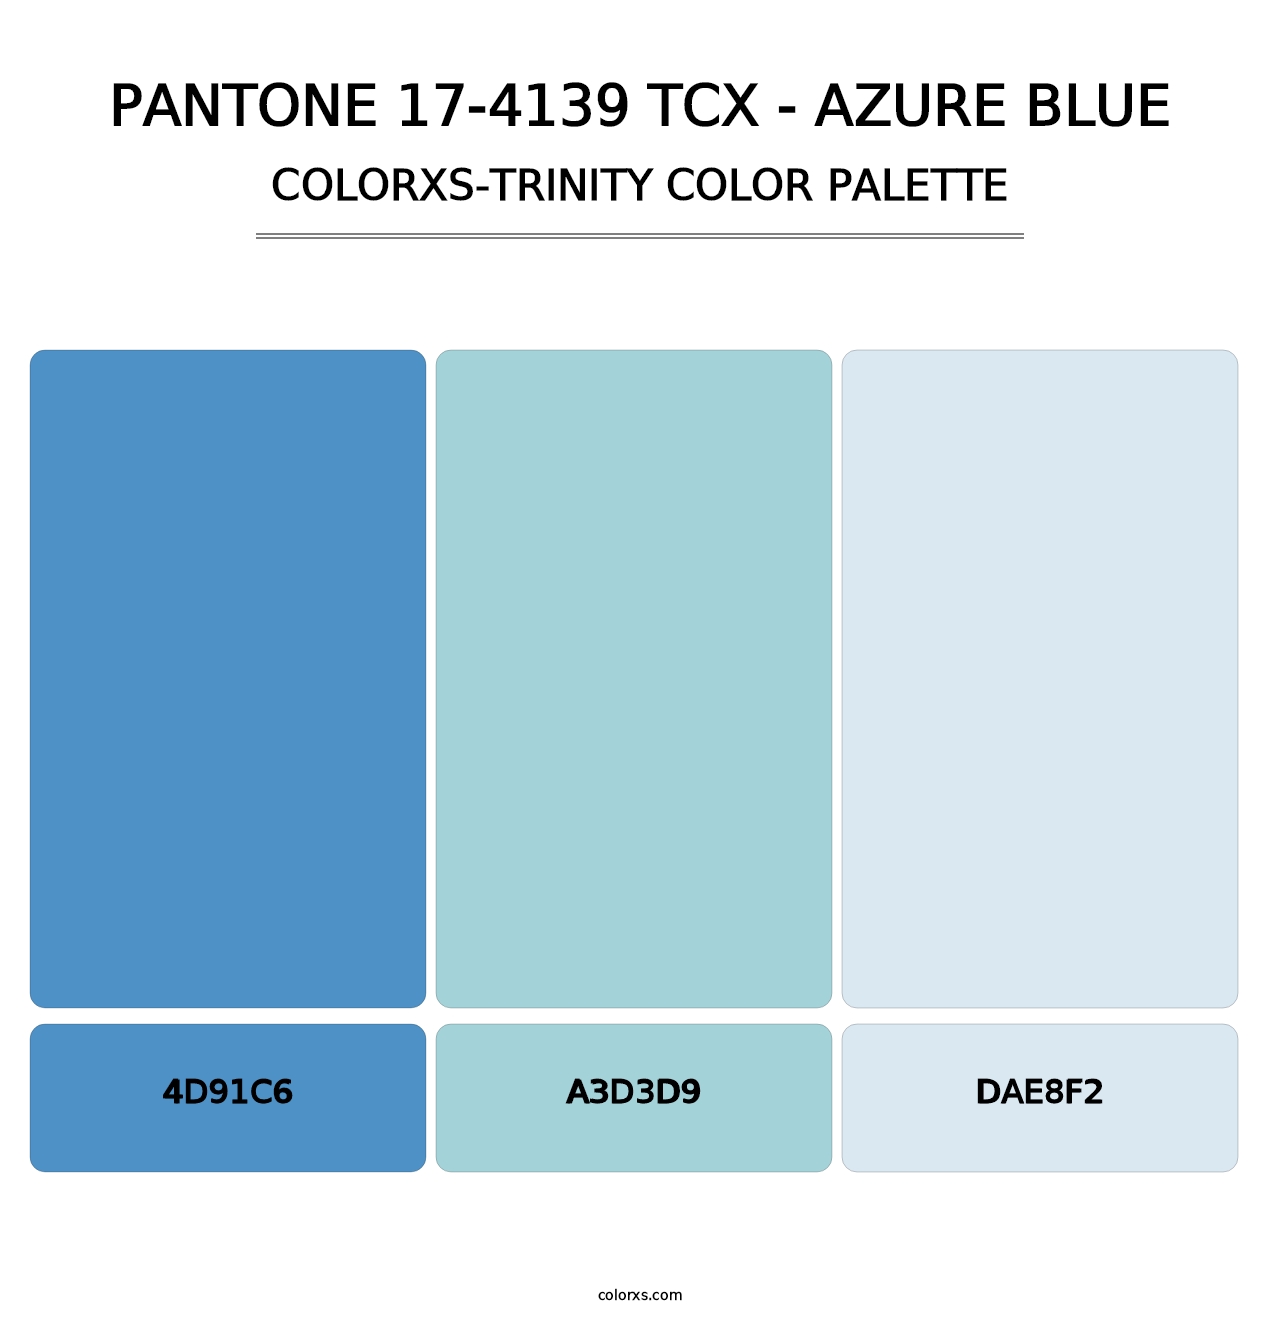 PANTONE 17-4139 TCX - Azure Blue - Colorxs Trinity Palette